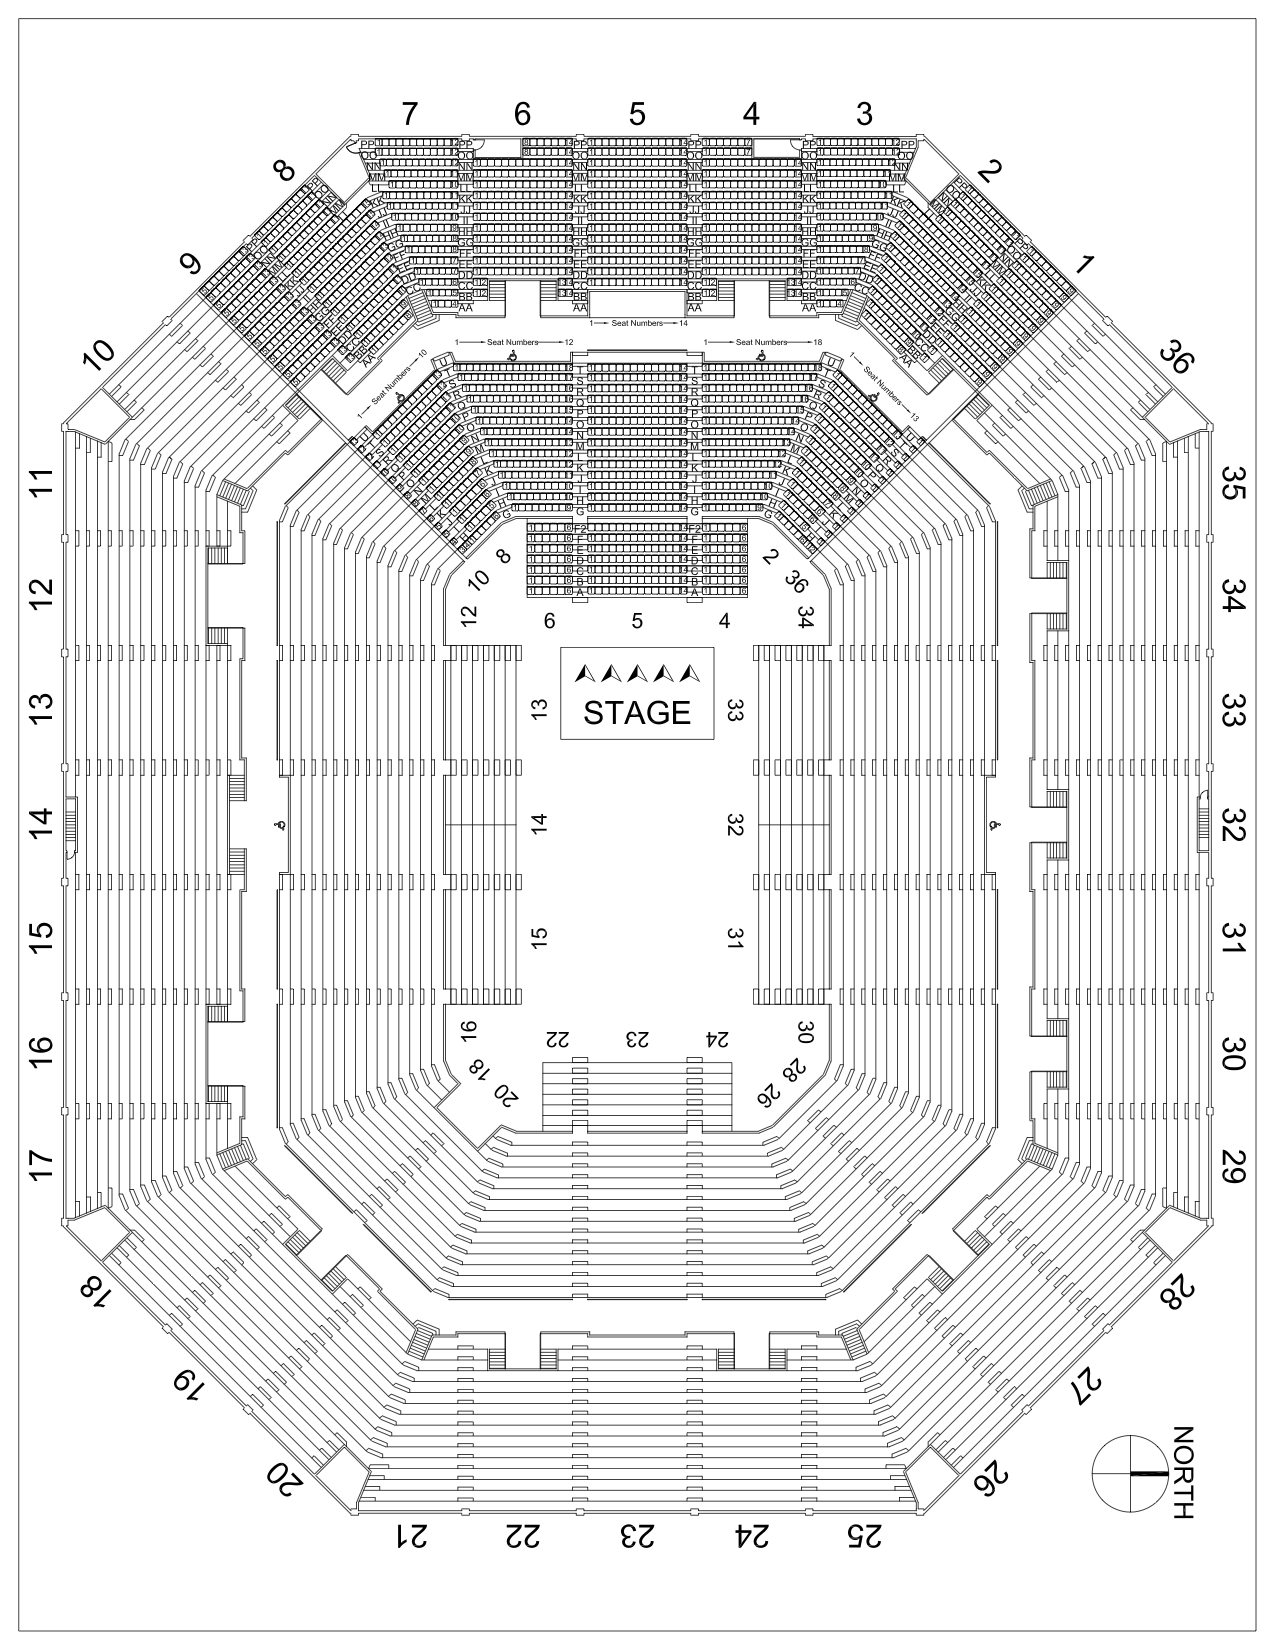 Wsu Beasley Coliseum Seating Chart